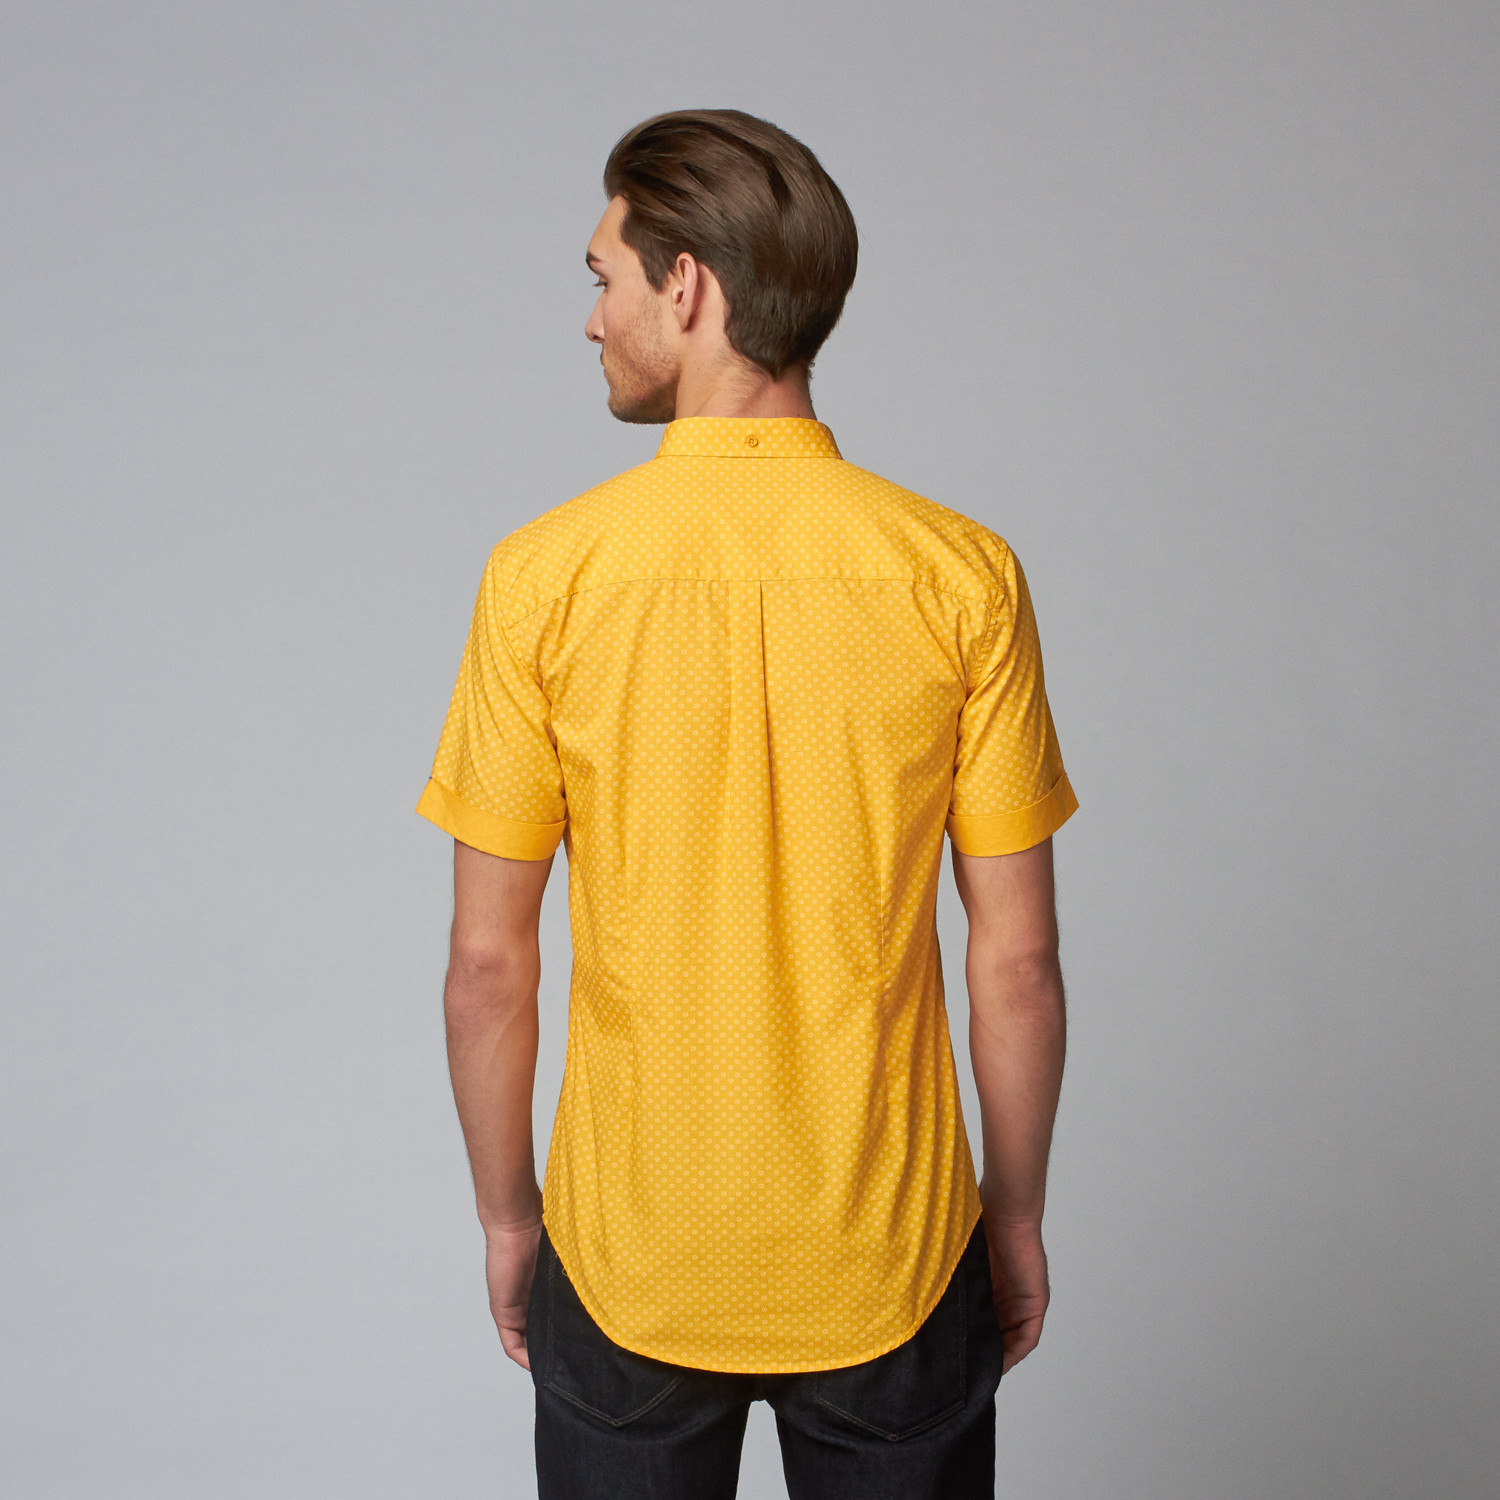 Thorpe Button Down Shirt // Yellow Polka Dot (XS) - Merc - Touch of Modern